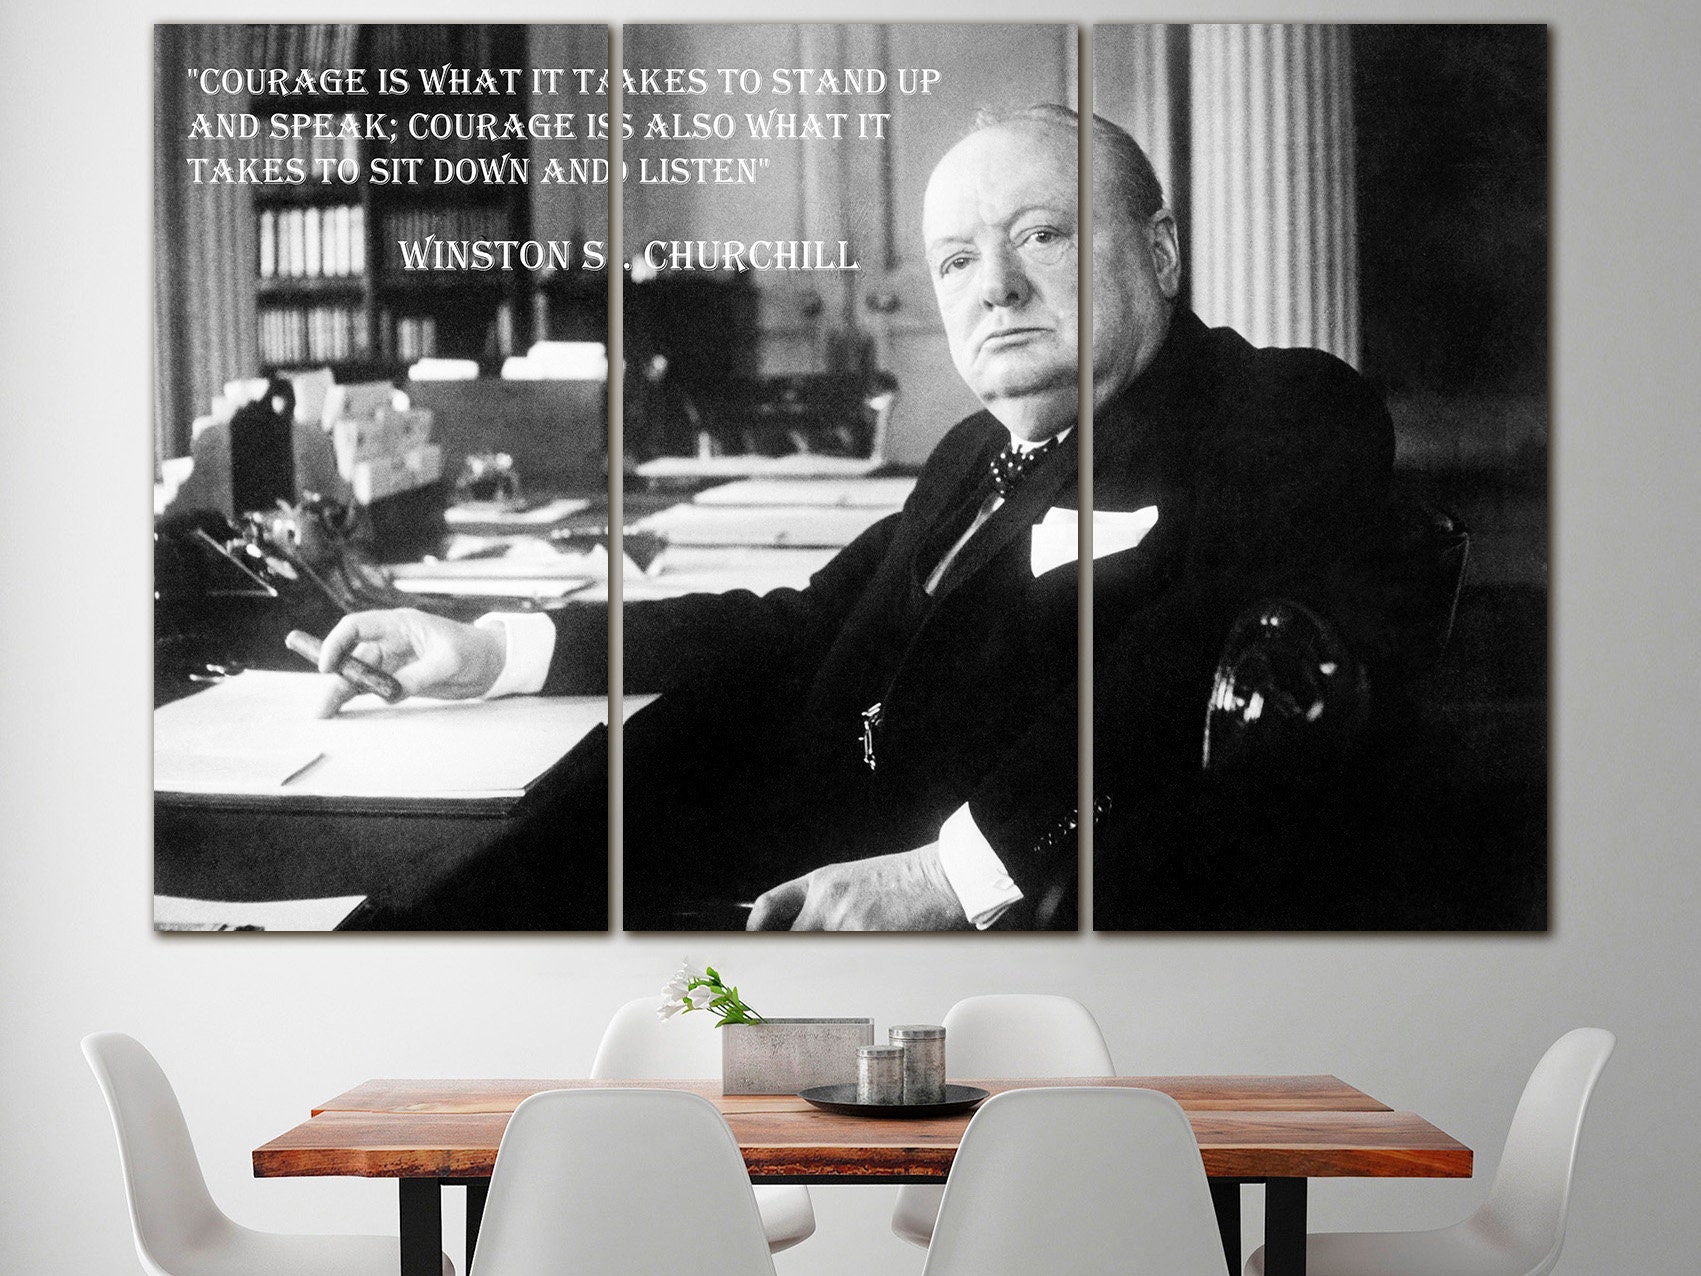 Winston Churchill canvas Churchill quotes decor Motivation art | Etsy